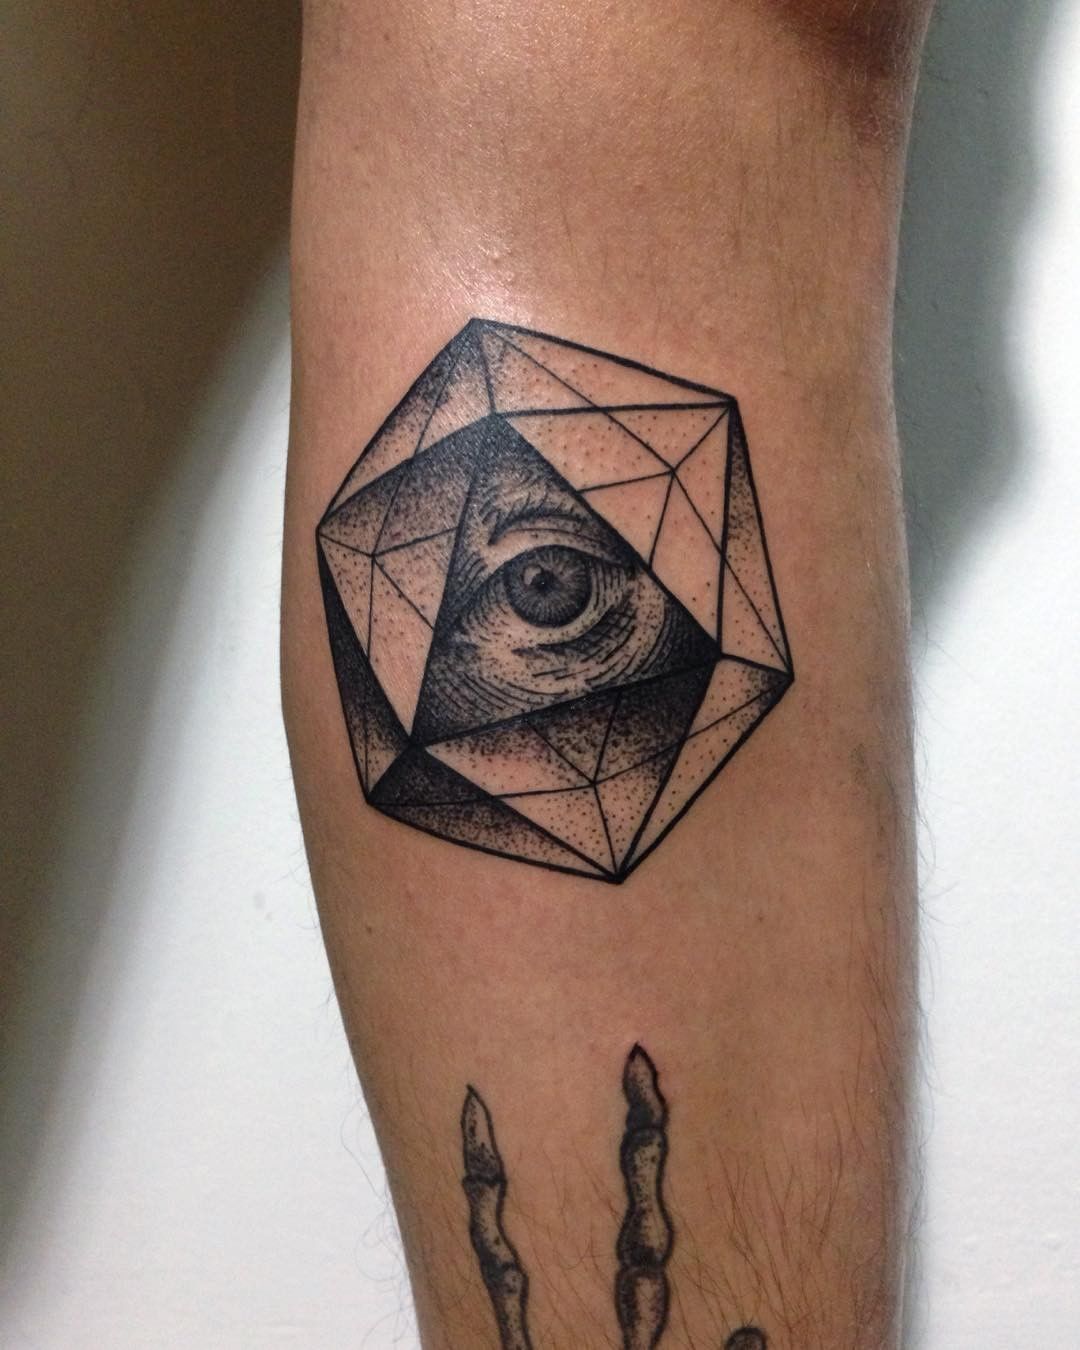 Icosahedron arm tattoo with an eye